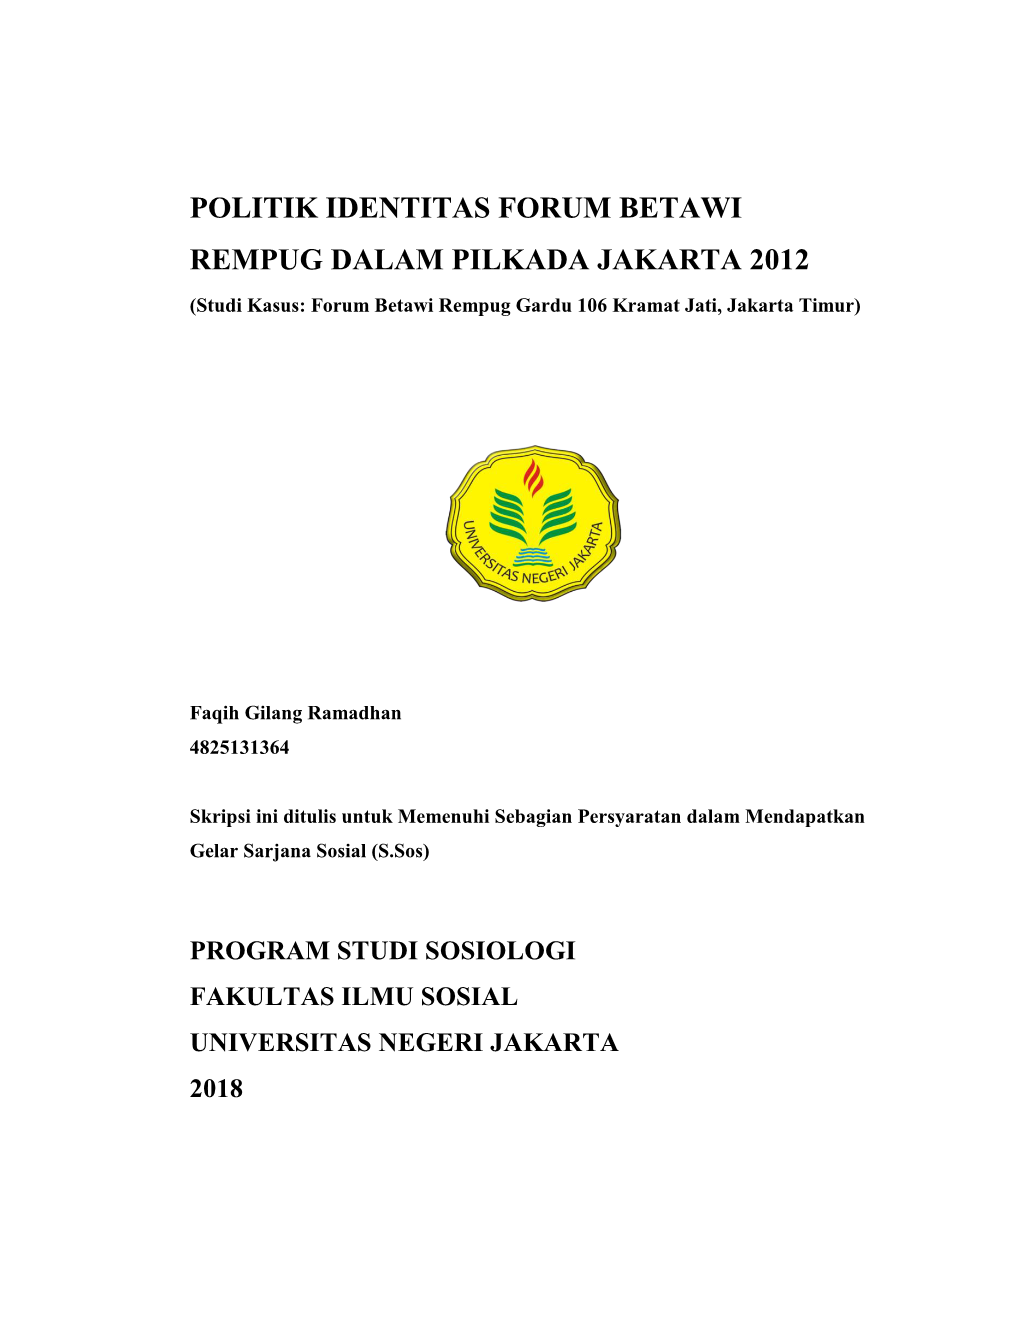 Politik Identitas Forum Betawi Rempug Dalam Pilkada Jakarta 2012